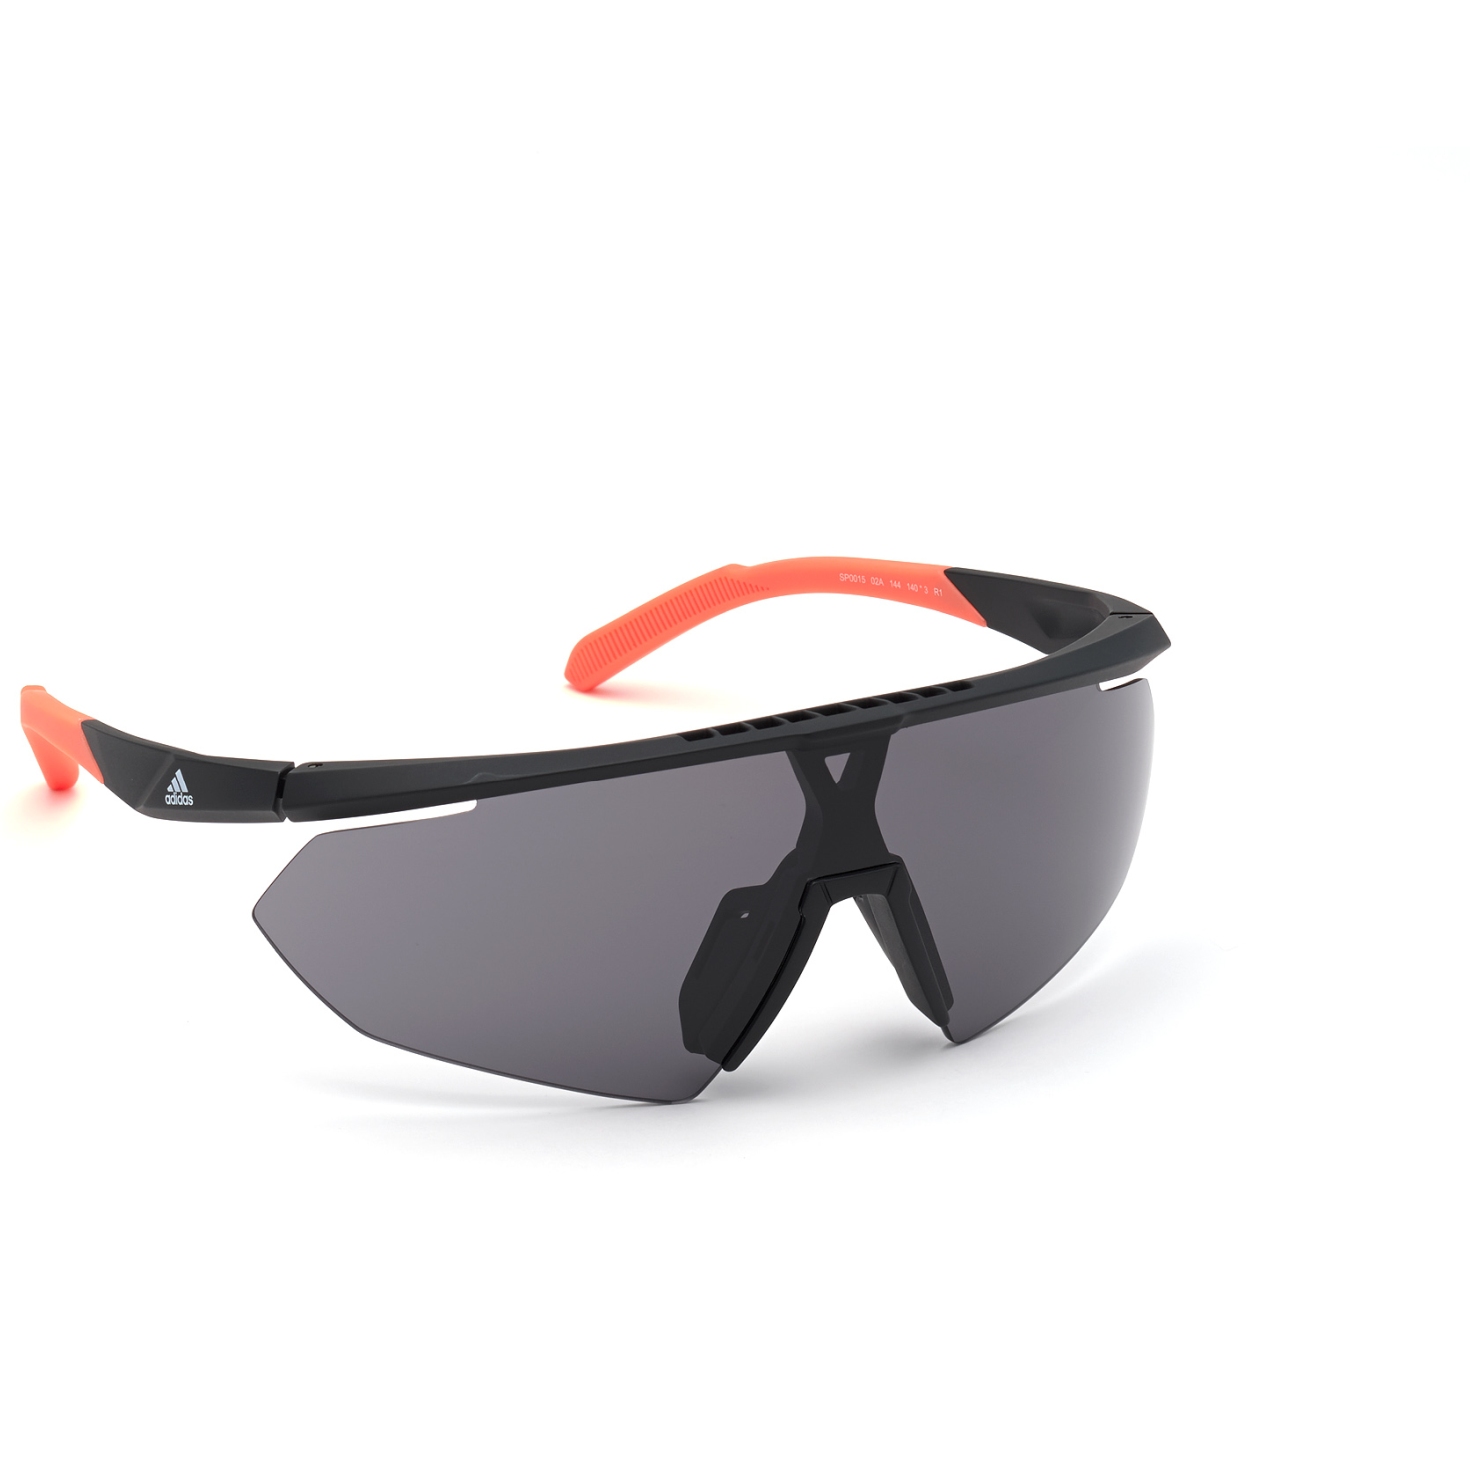 Image of adidas Sp0015 Injected Sports Sunglasses - Matte Black / Contrast Black + Orange